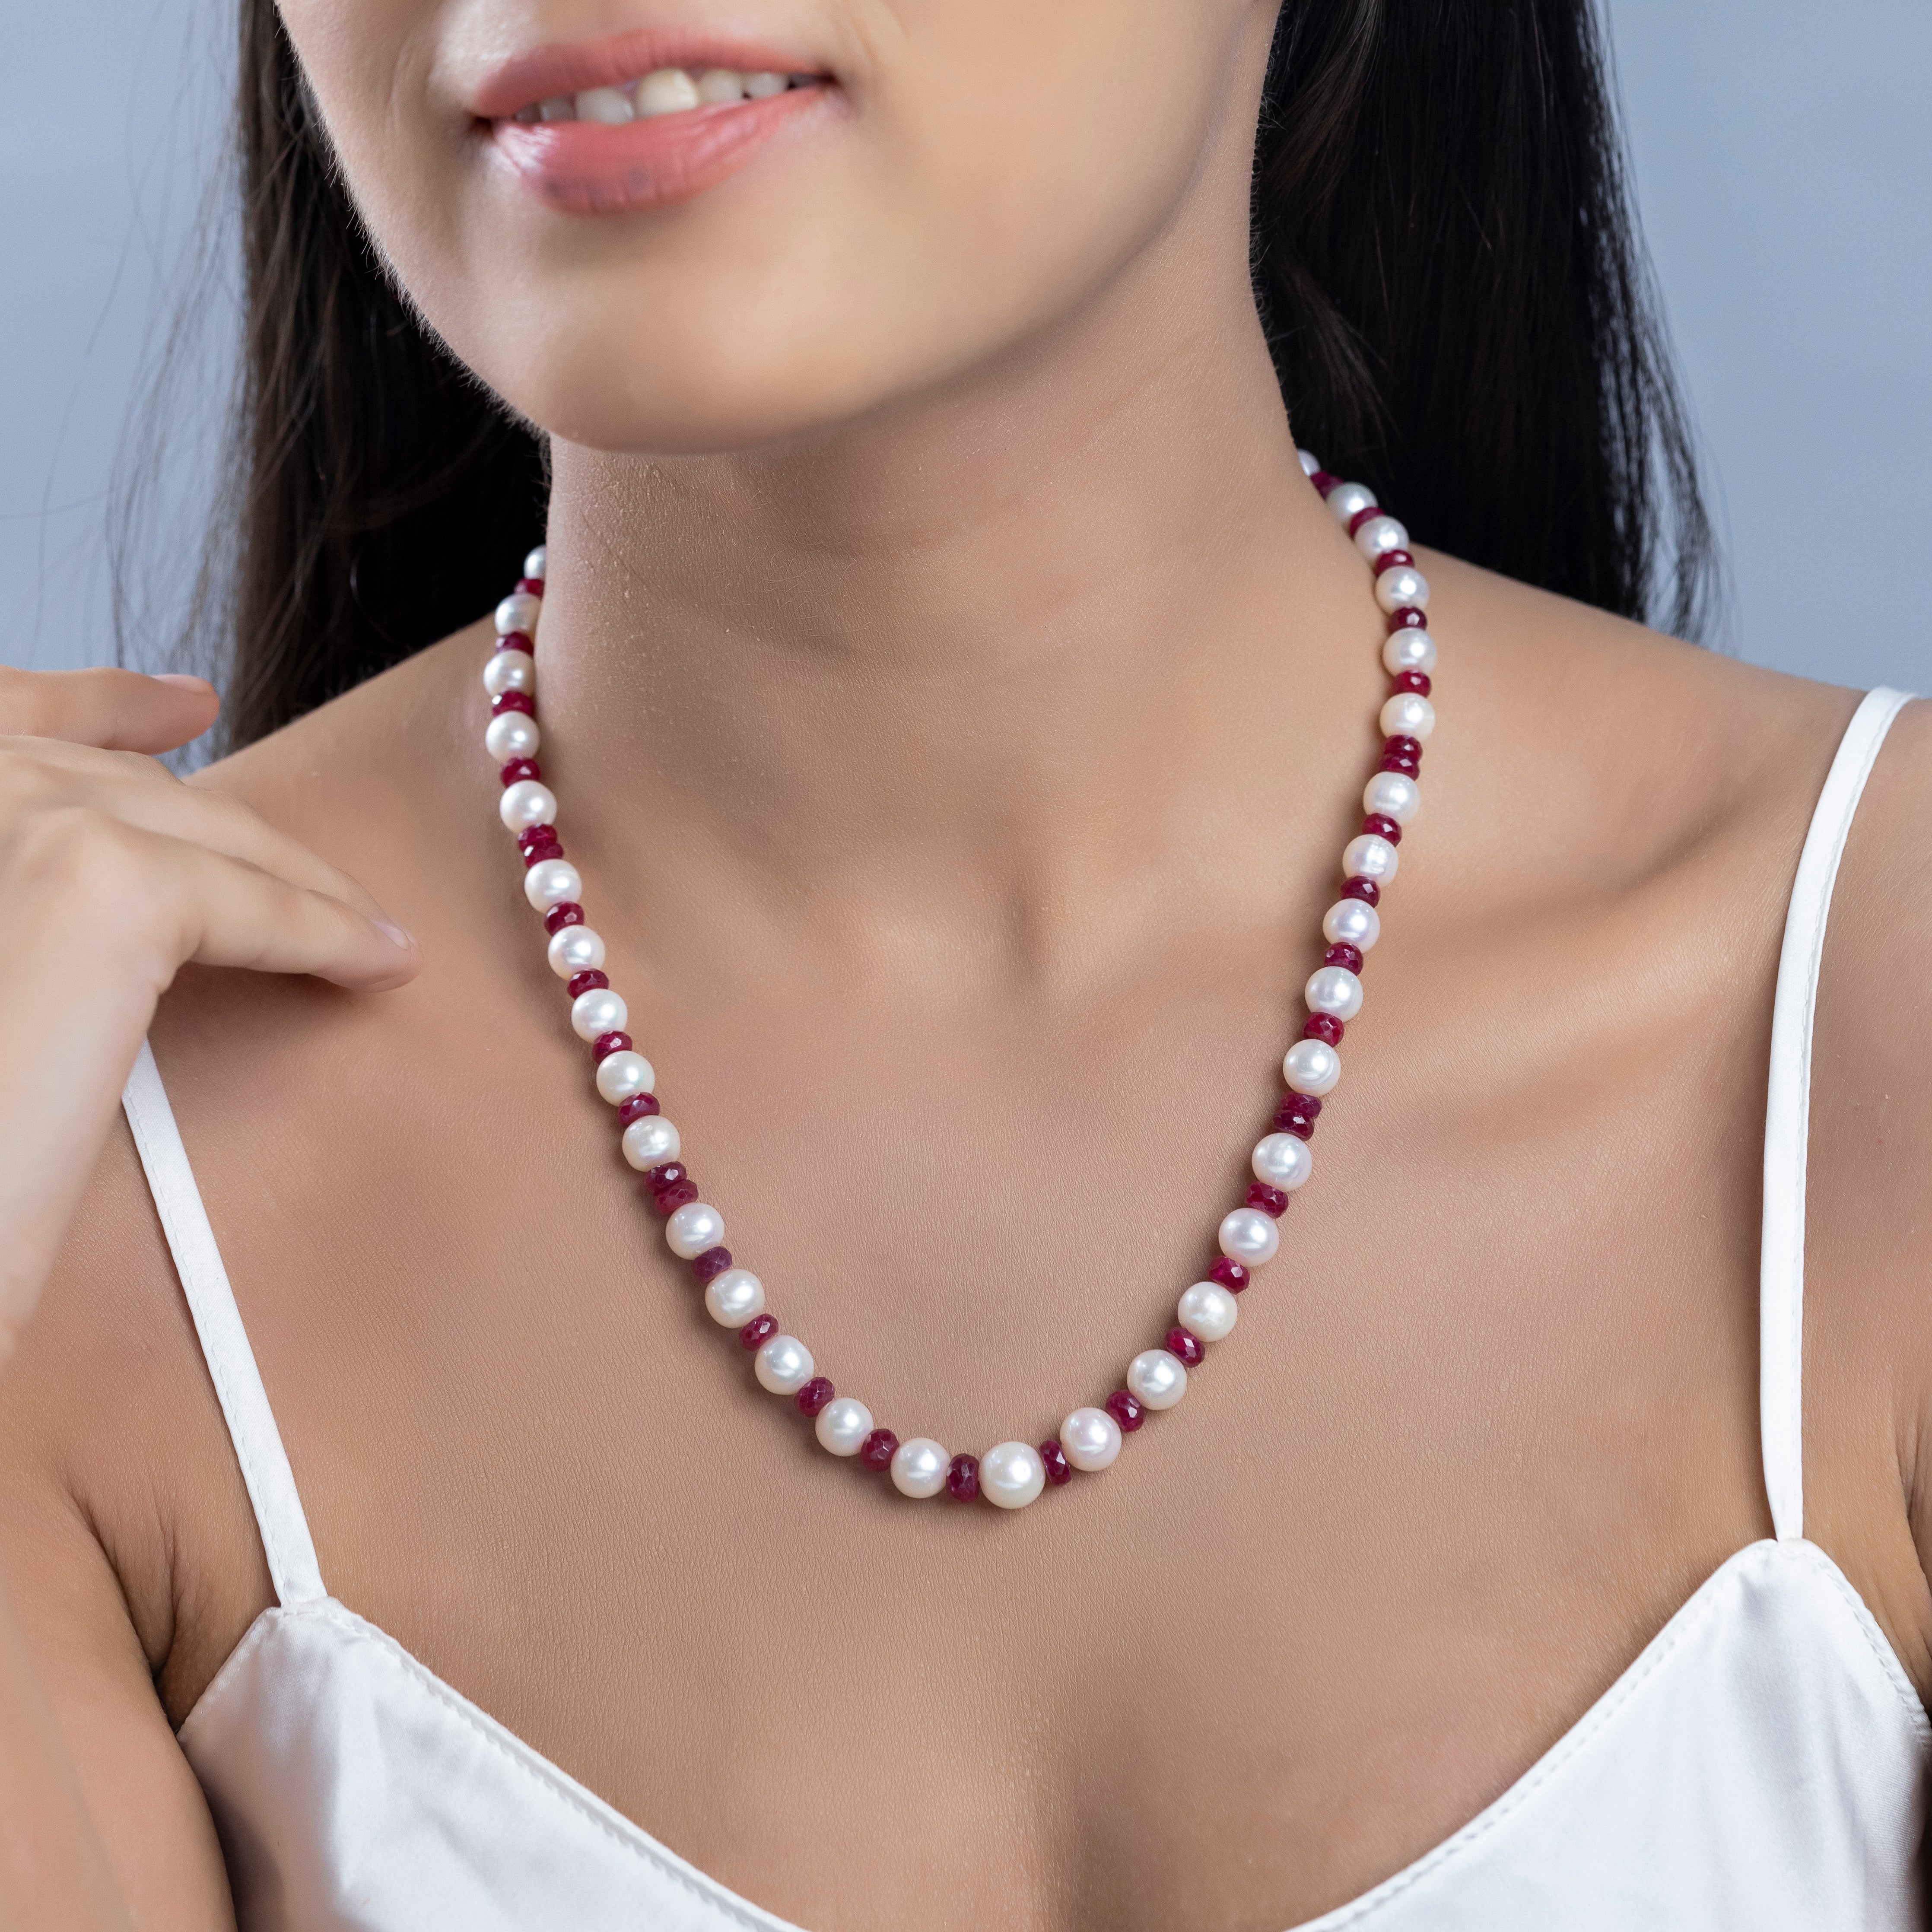 Crimson Elegance Freshwater Pearl Necklace